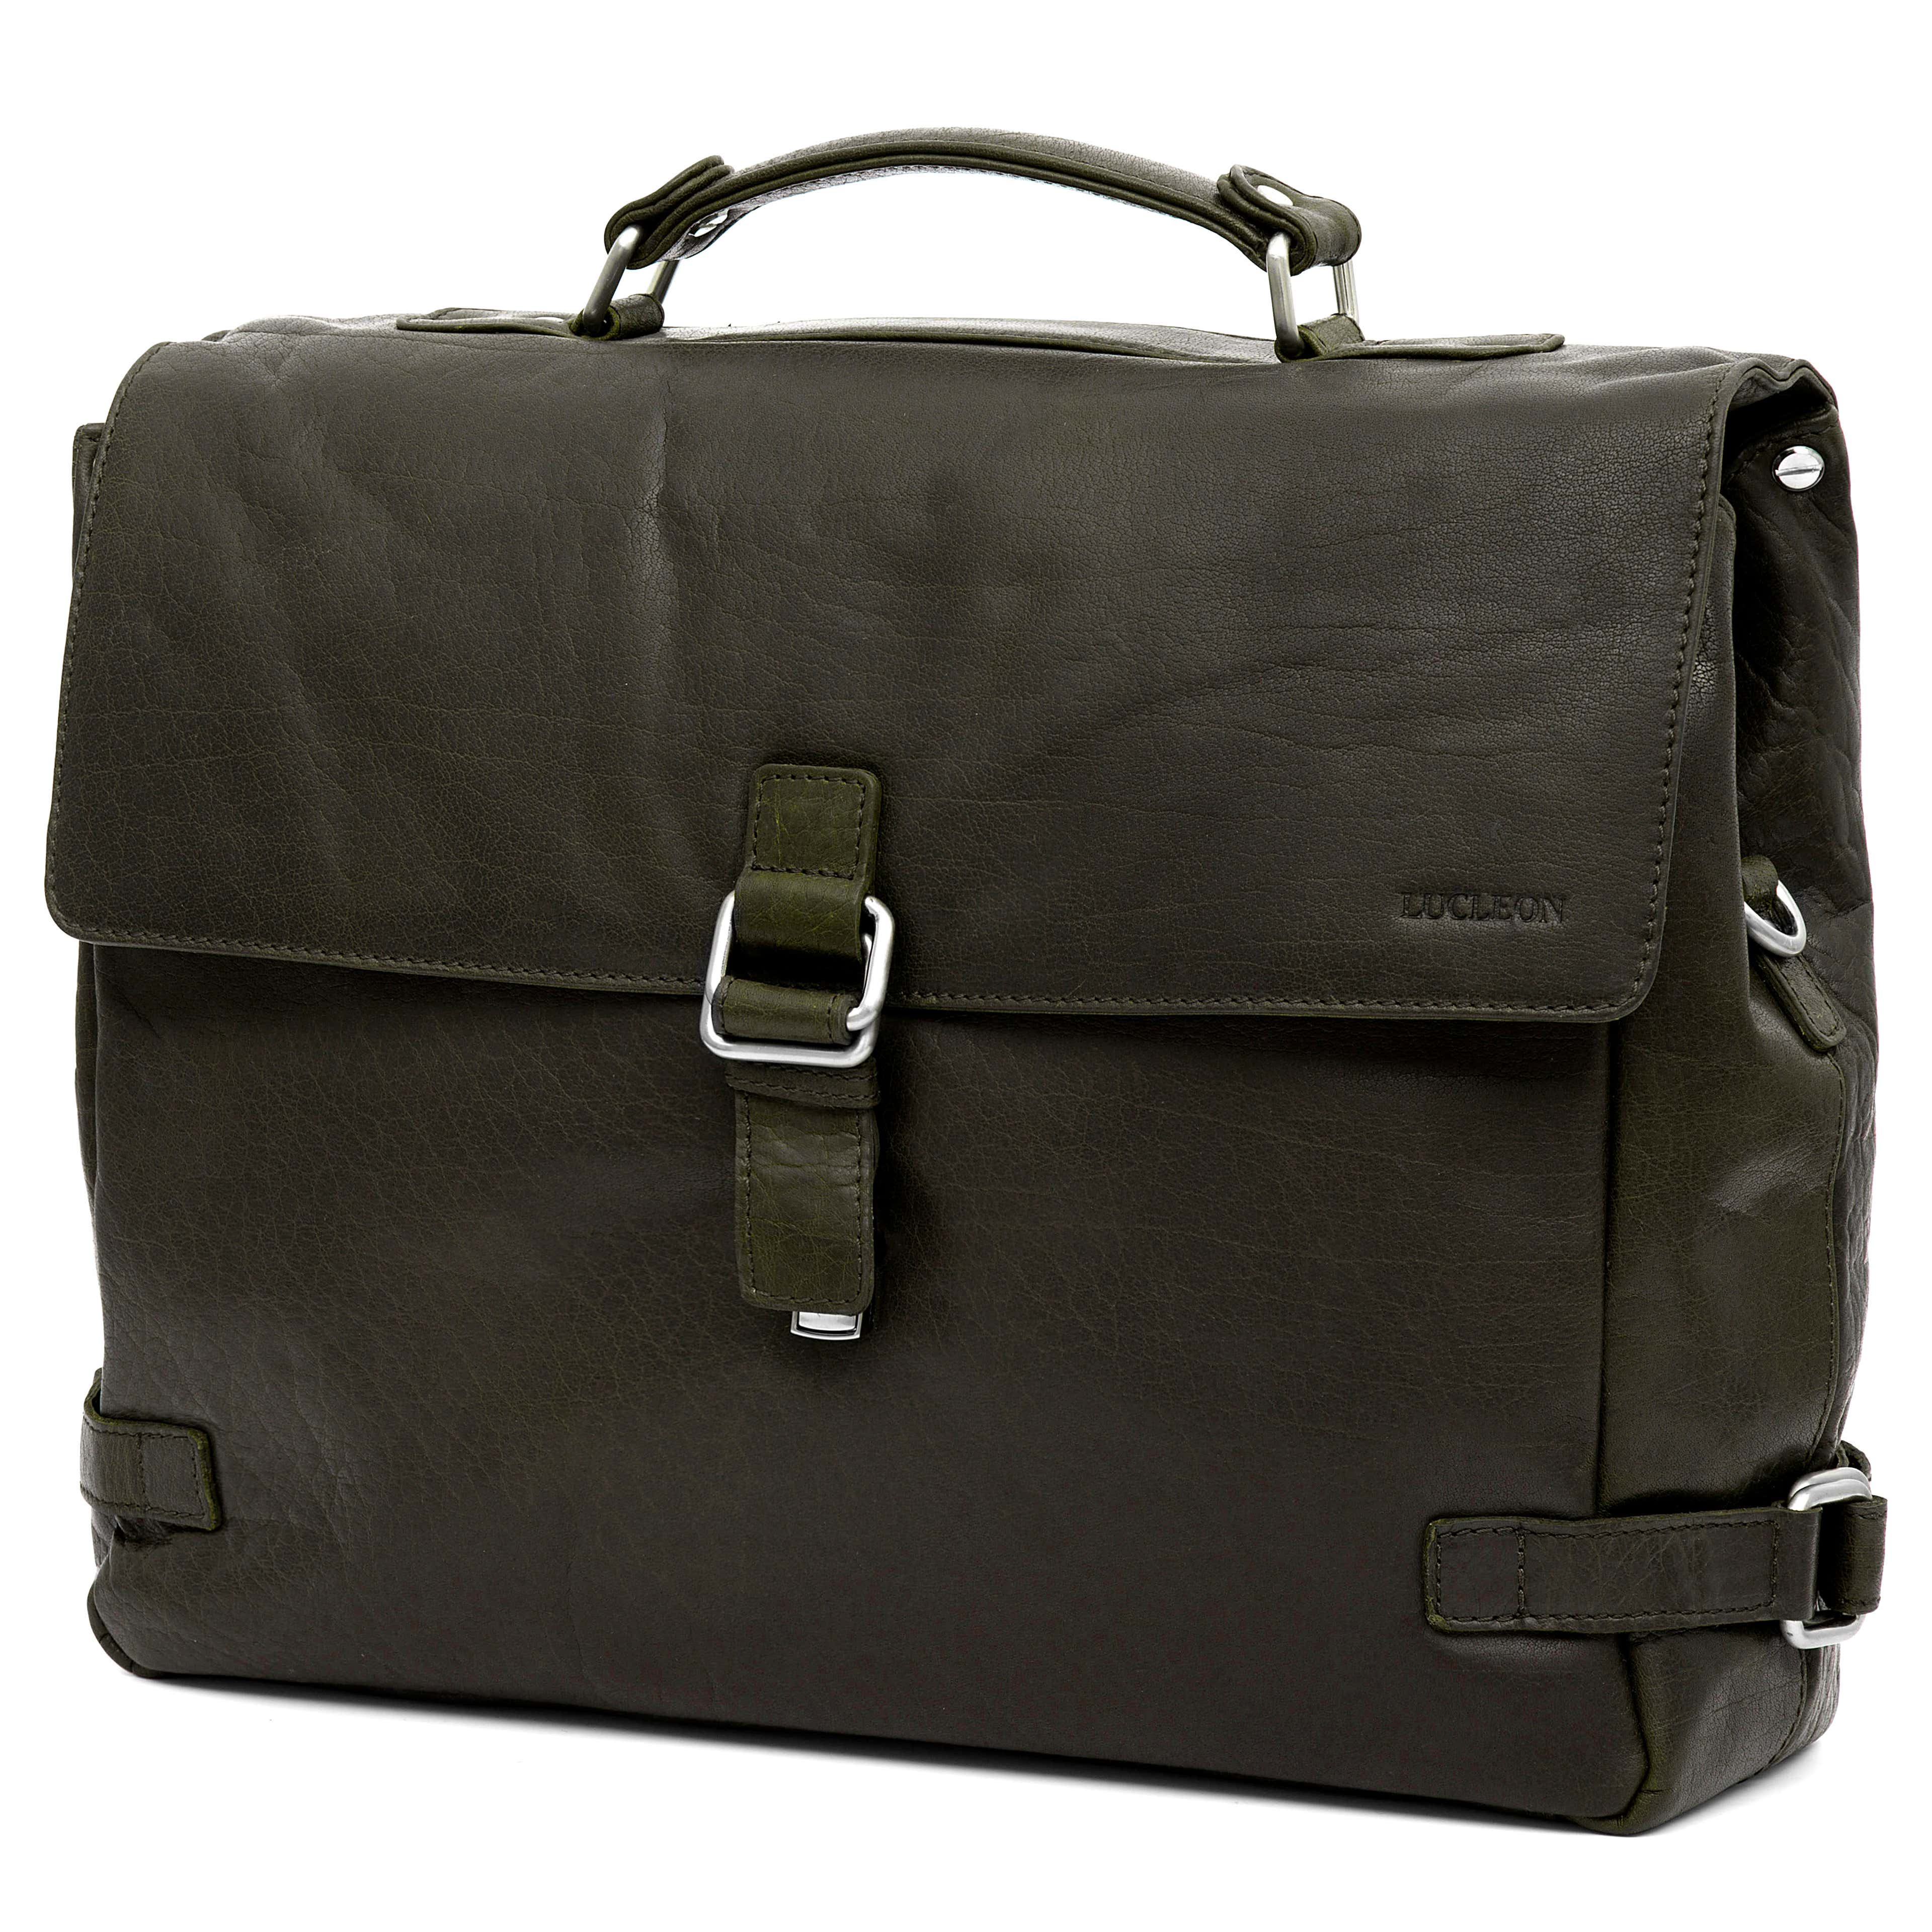 Montreal Luxury Leather Olive Satchel Bag